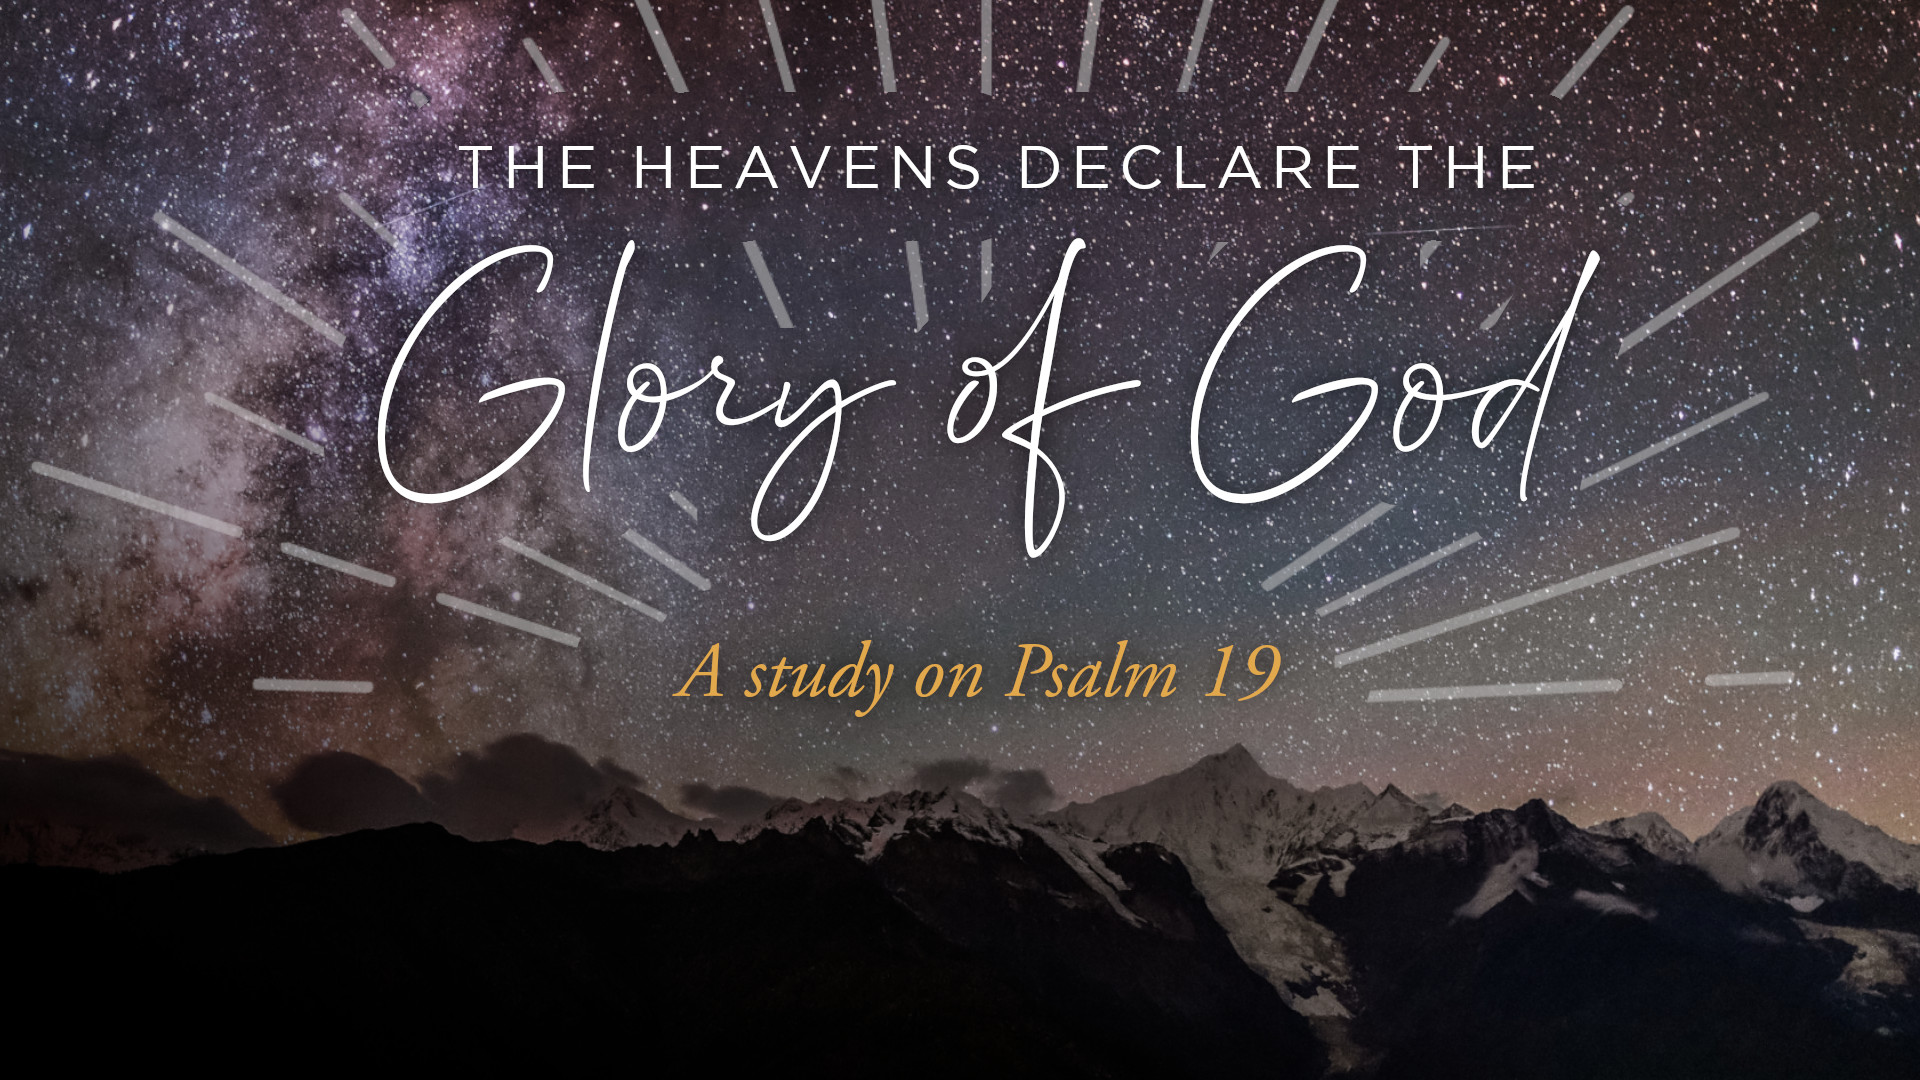 The heavens declare God's glory